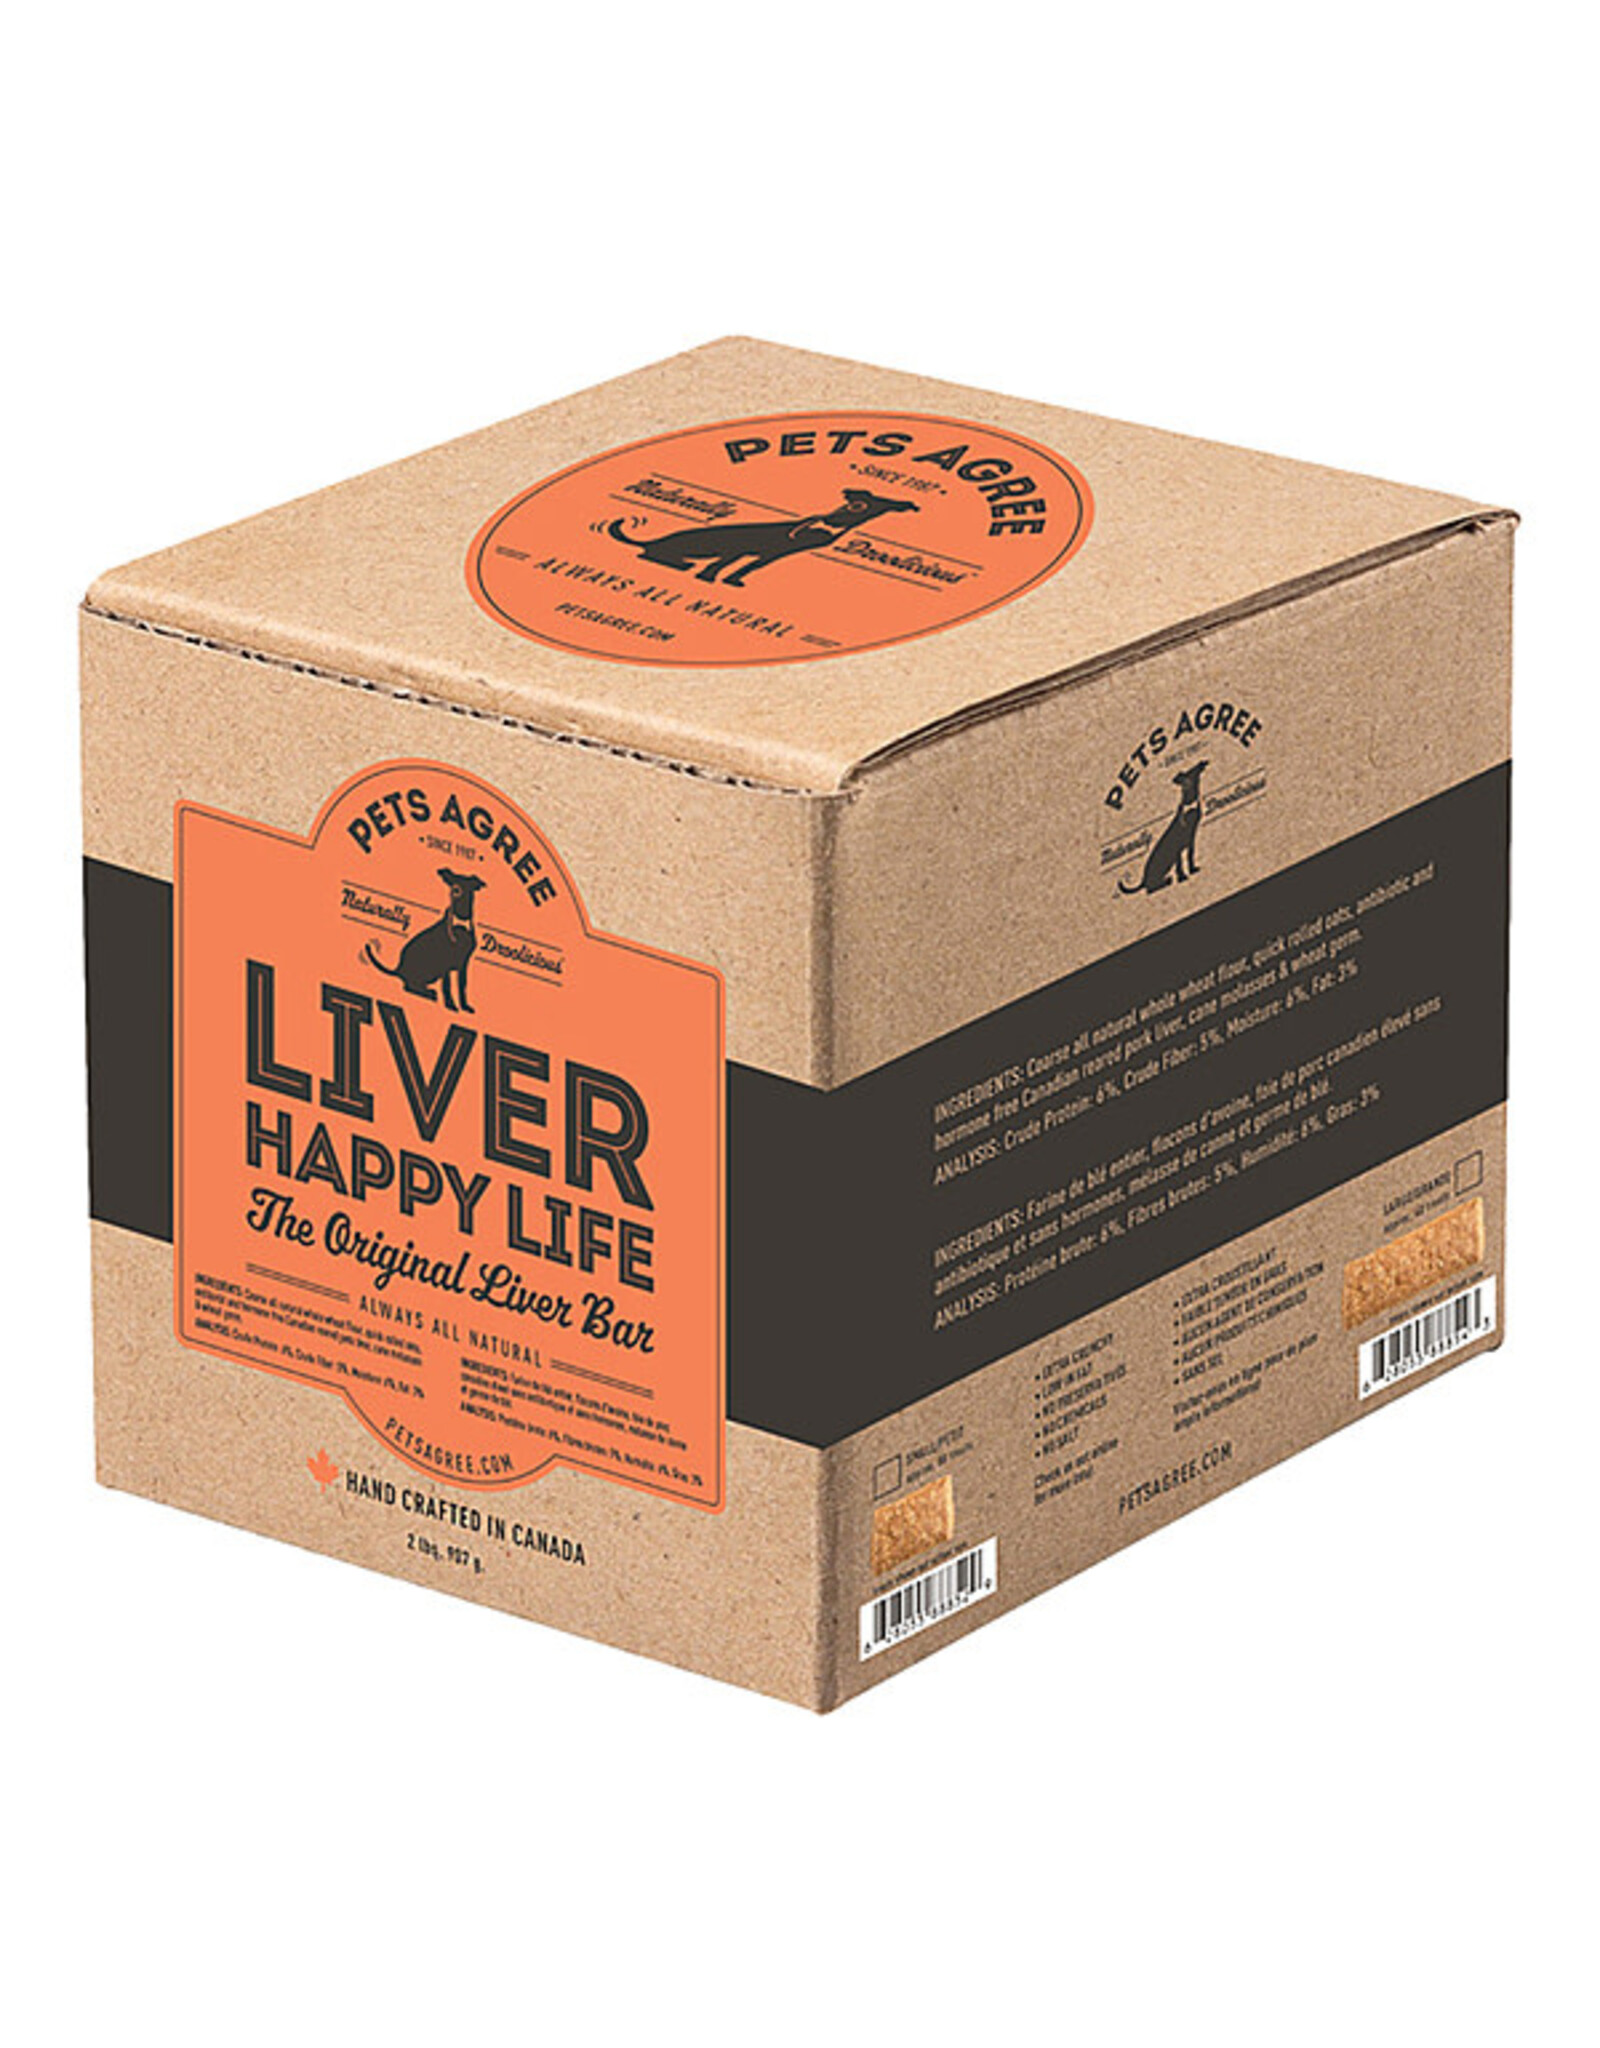 Pets Agree Happy Life Bars Liver Large 2LB